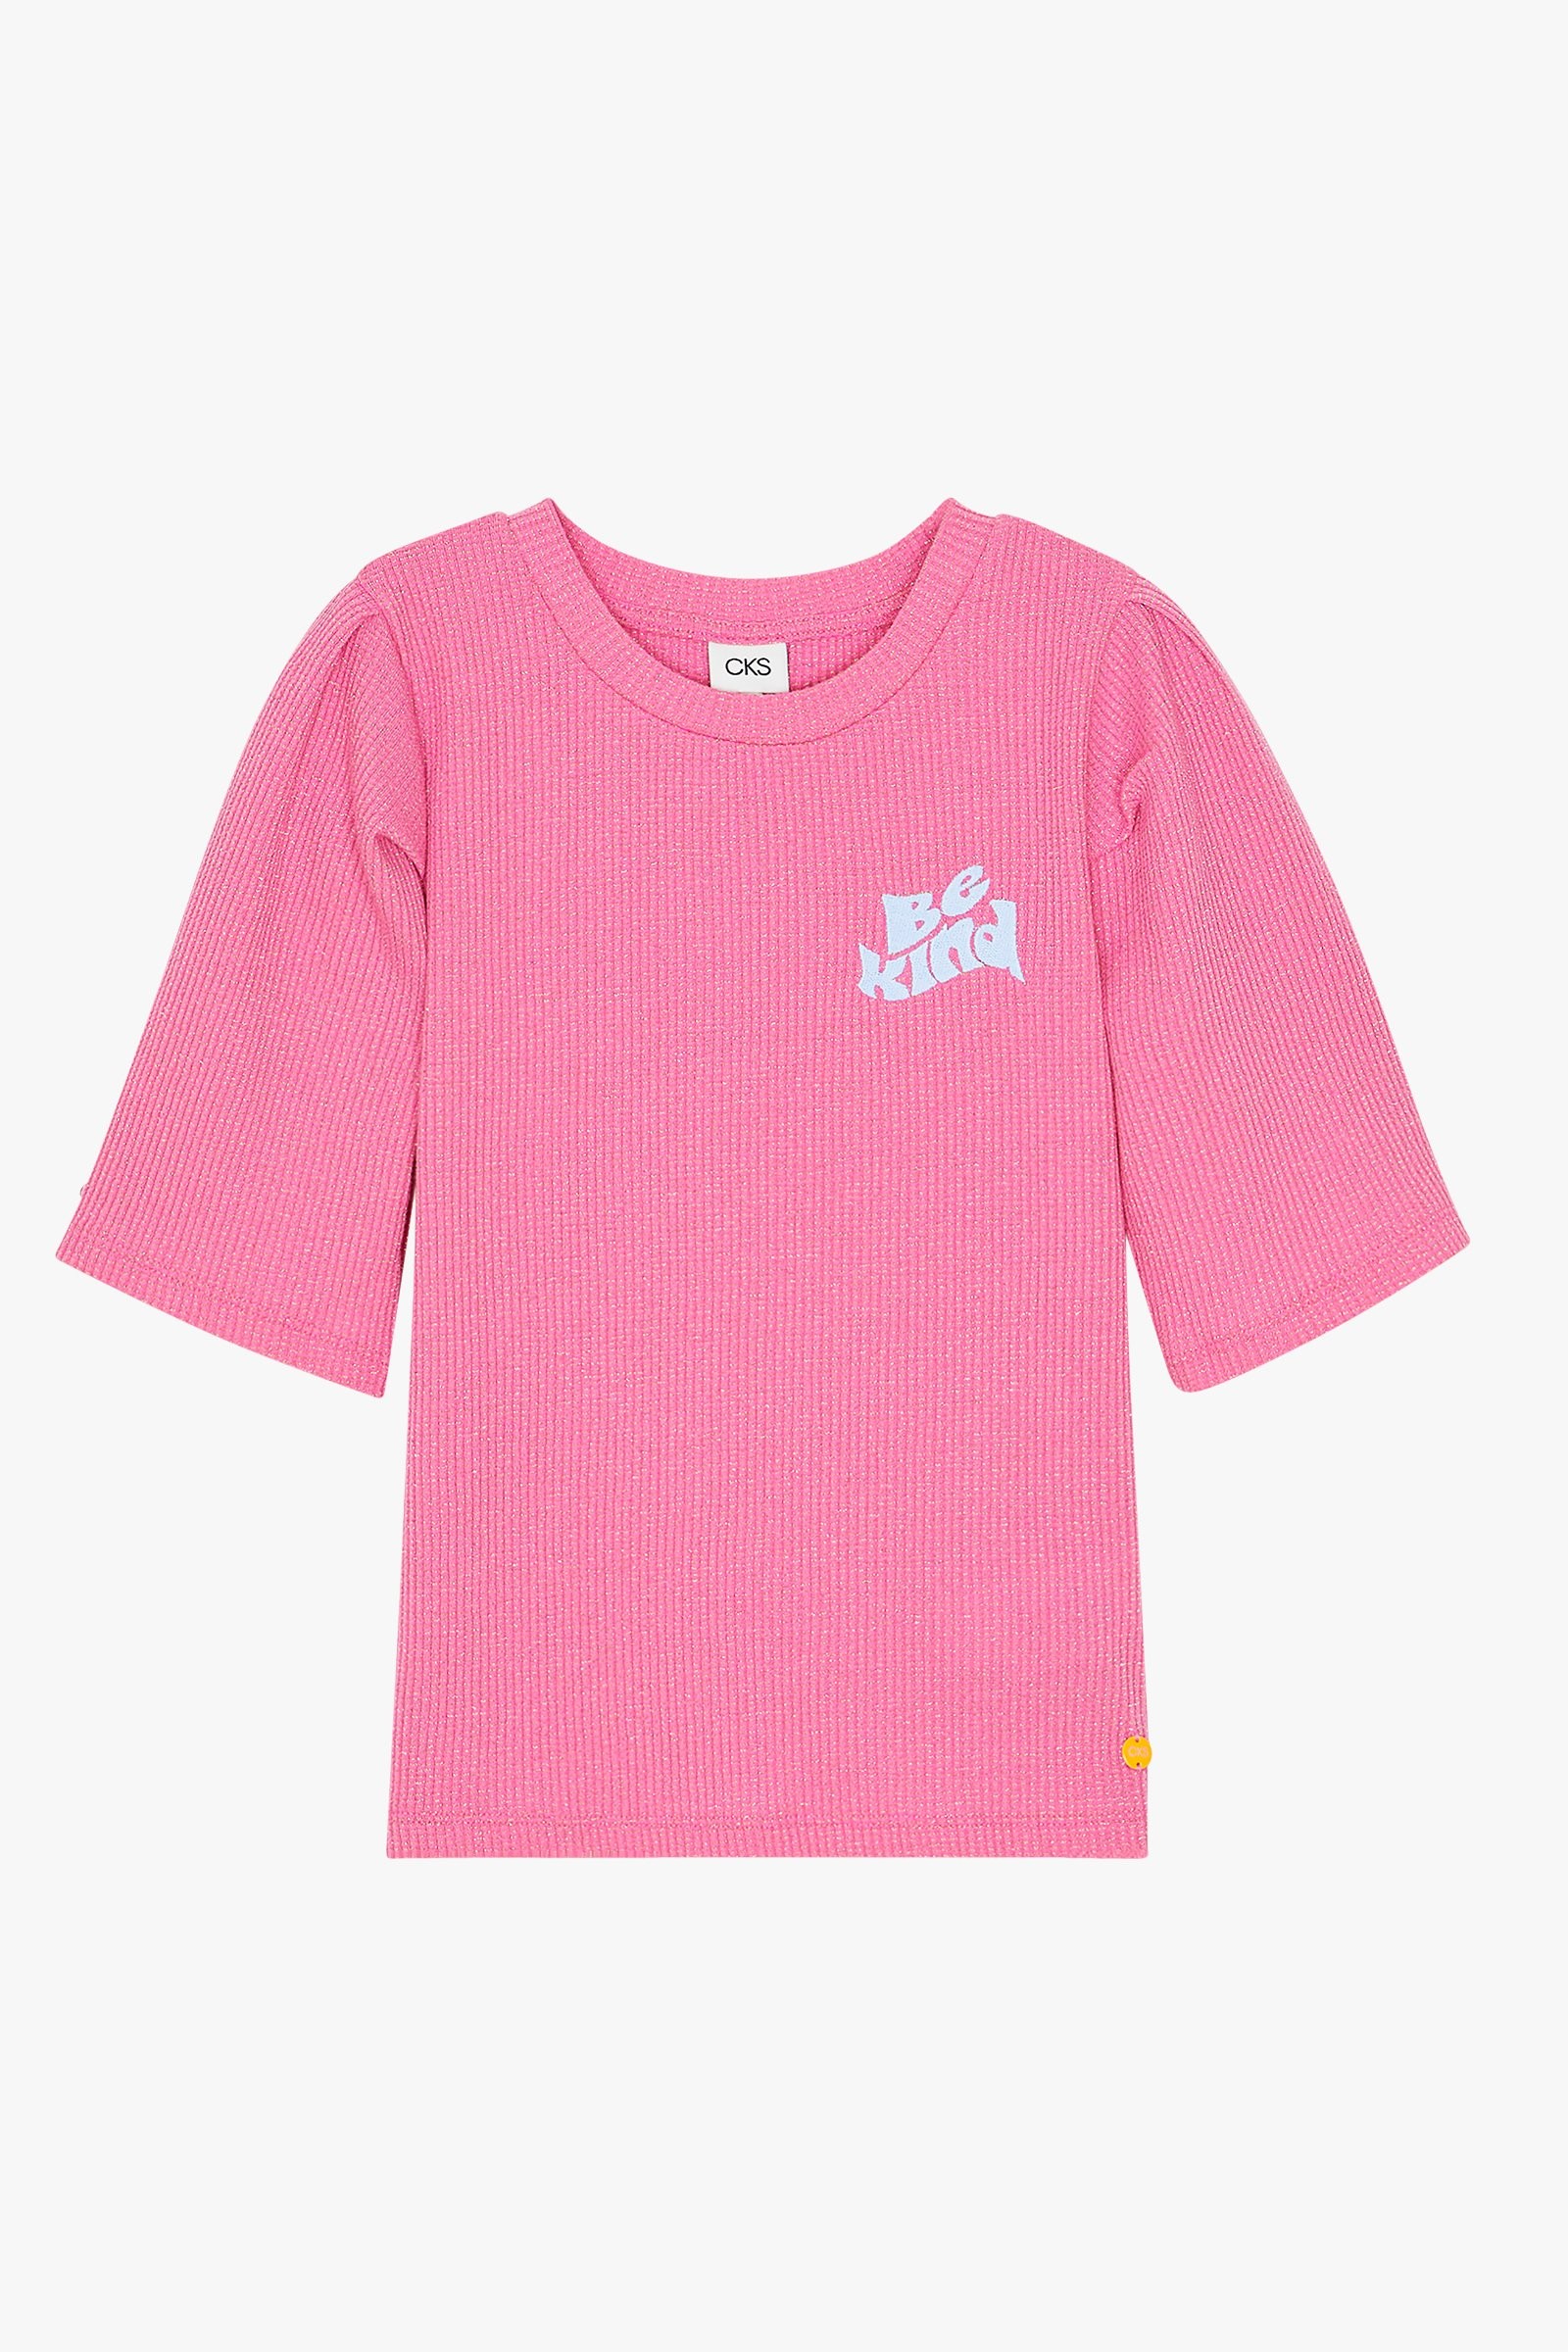 CKS Kids - ESIS - t-shirt short sleeves - bright pink